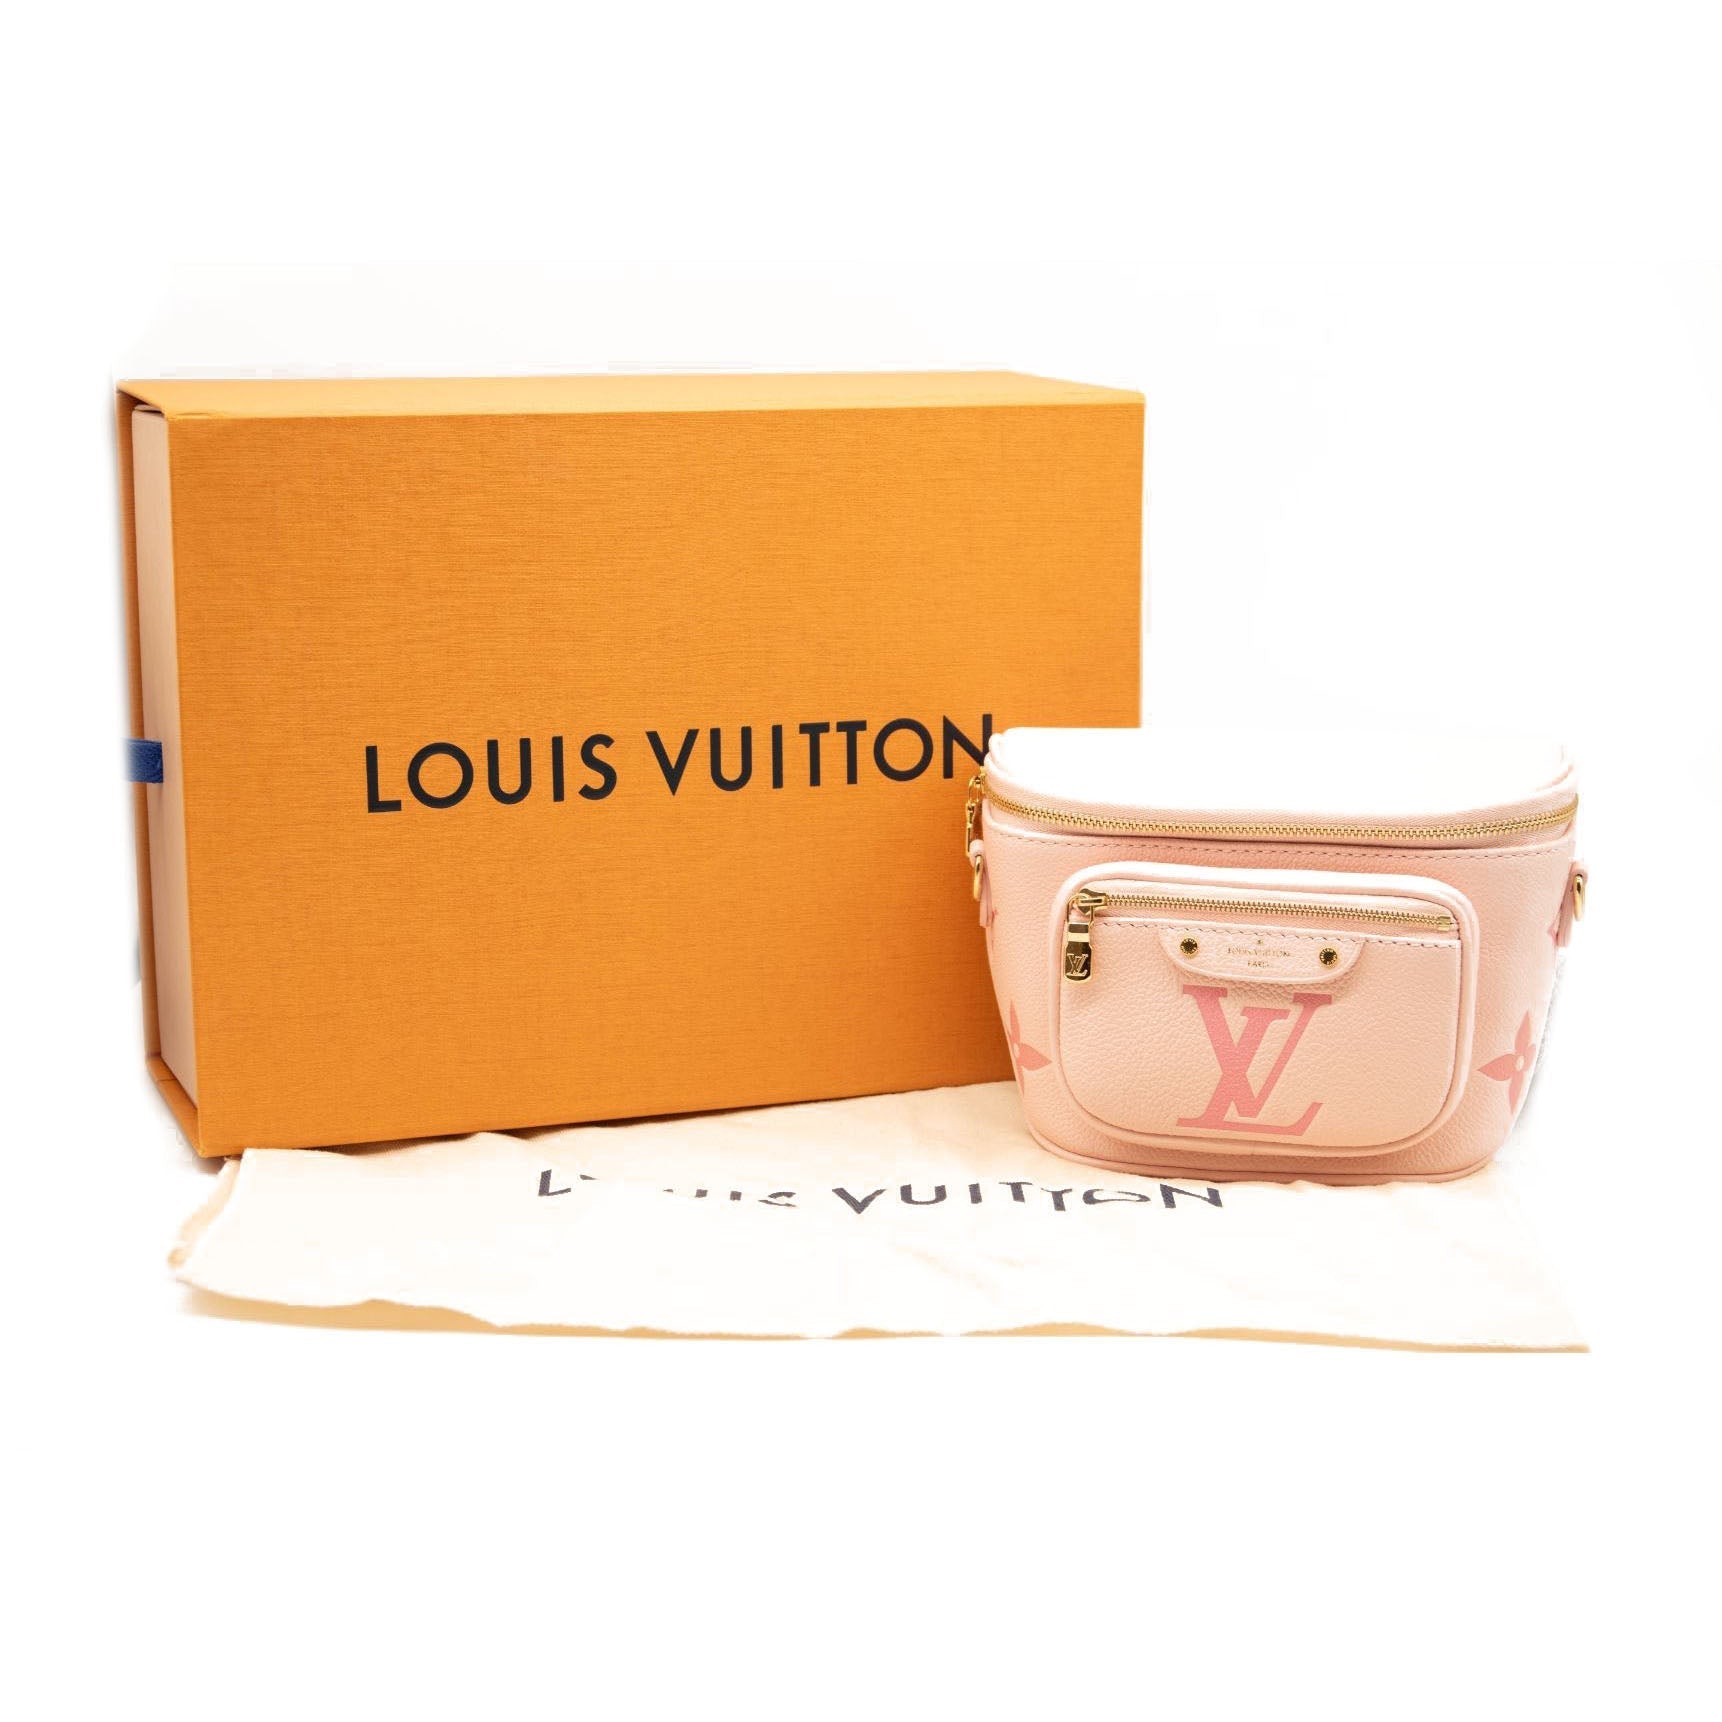 Louis Vuitton Mini Bumbag BRAND NEW